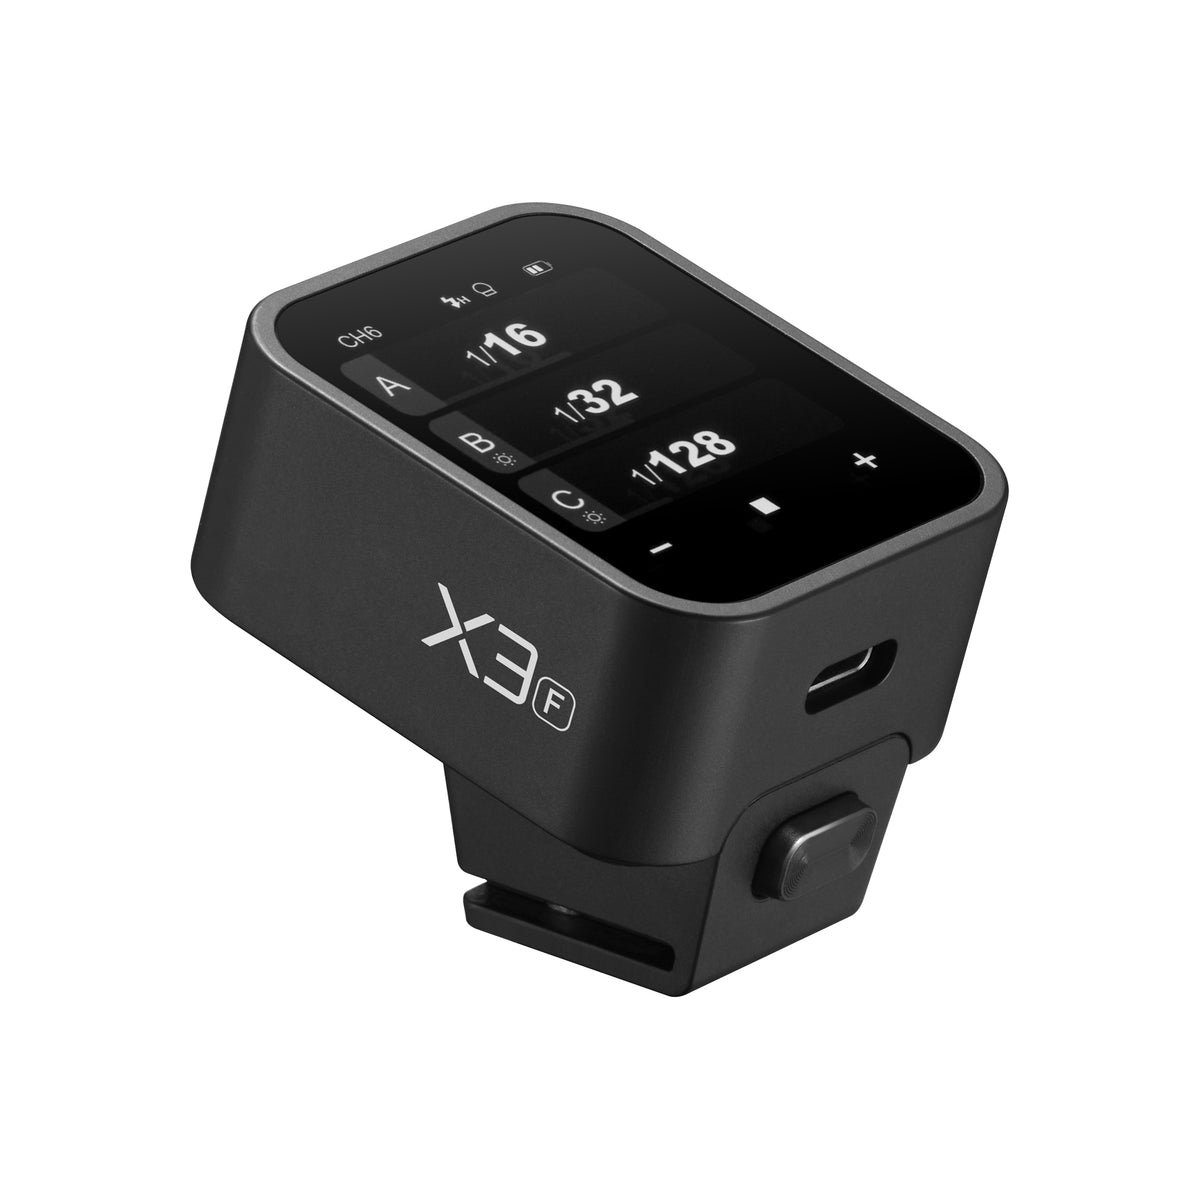 Godox X3-F Touchscreen Radio Trigger Controller - Fuji